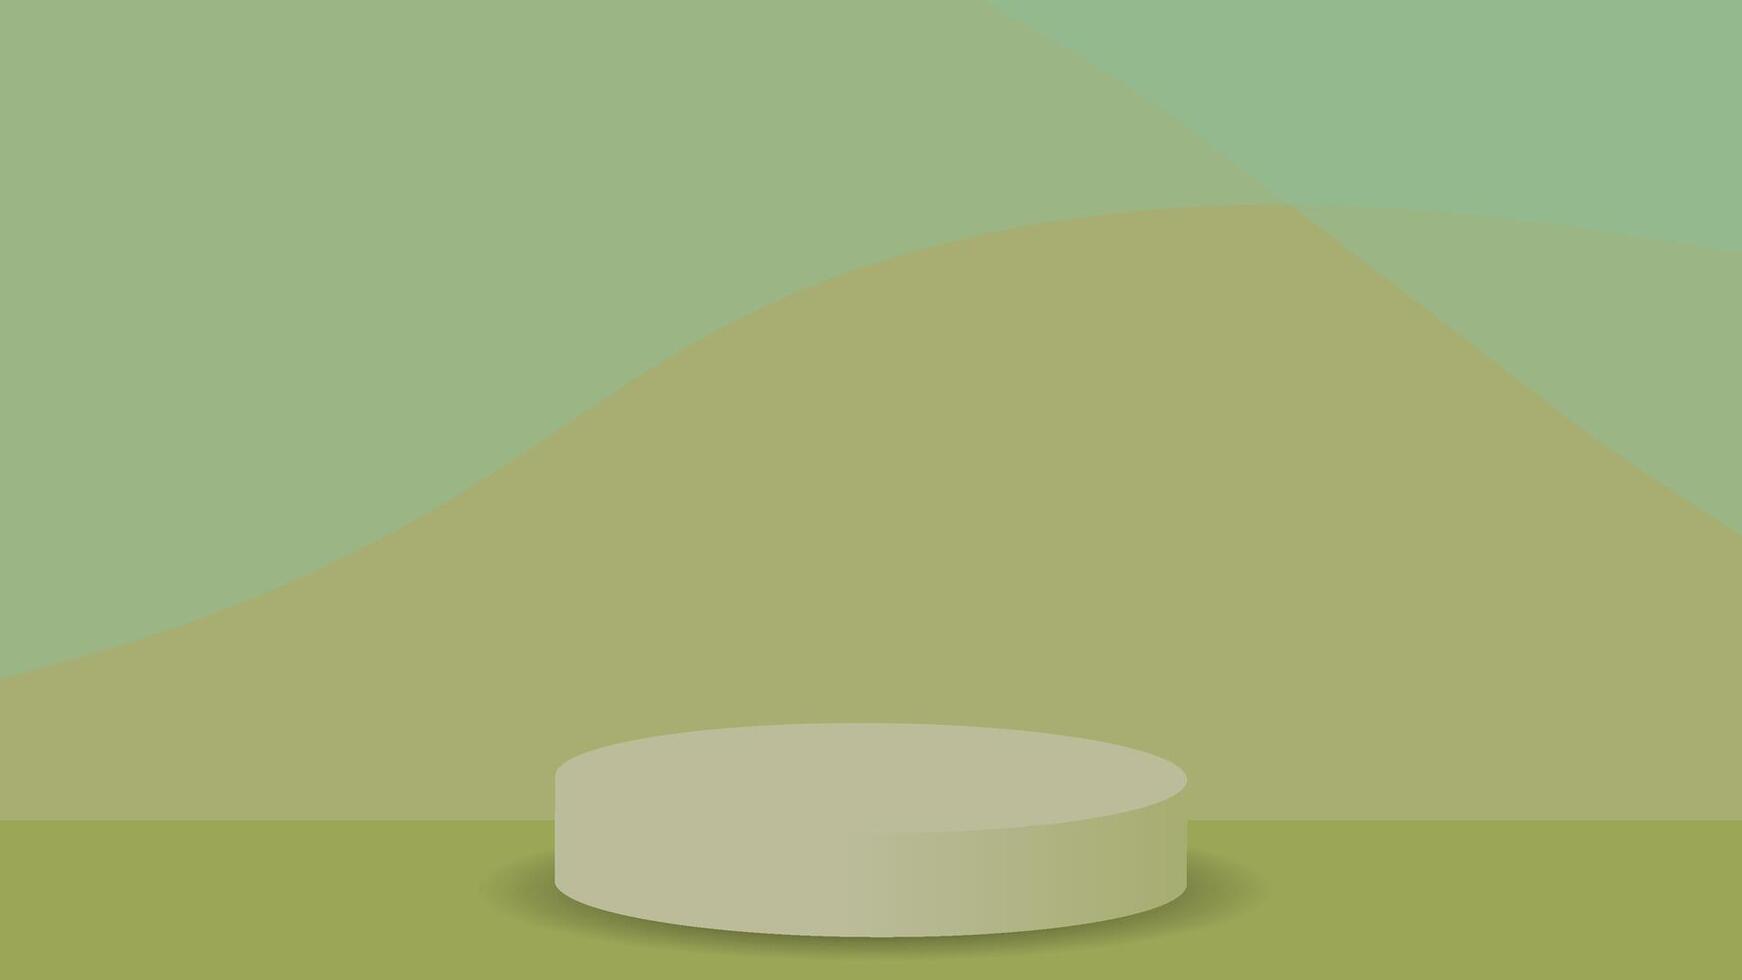 verde podio etapa fondo, mínimo estilo. 3d vector minimalismo